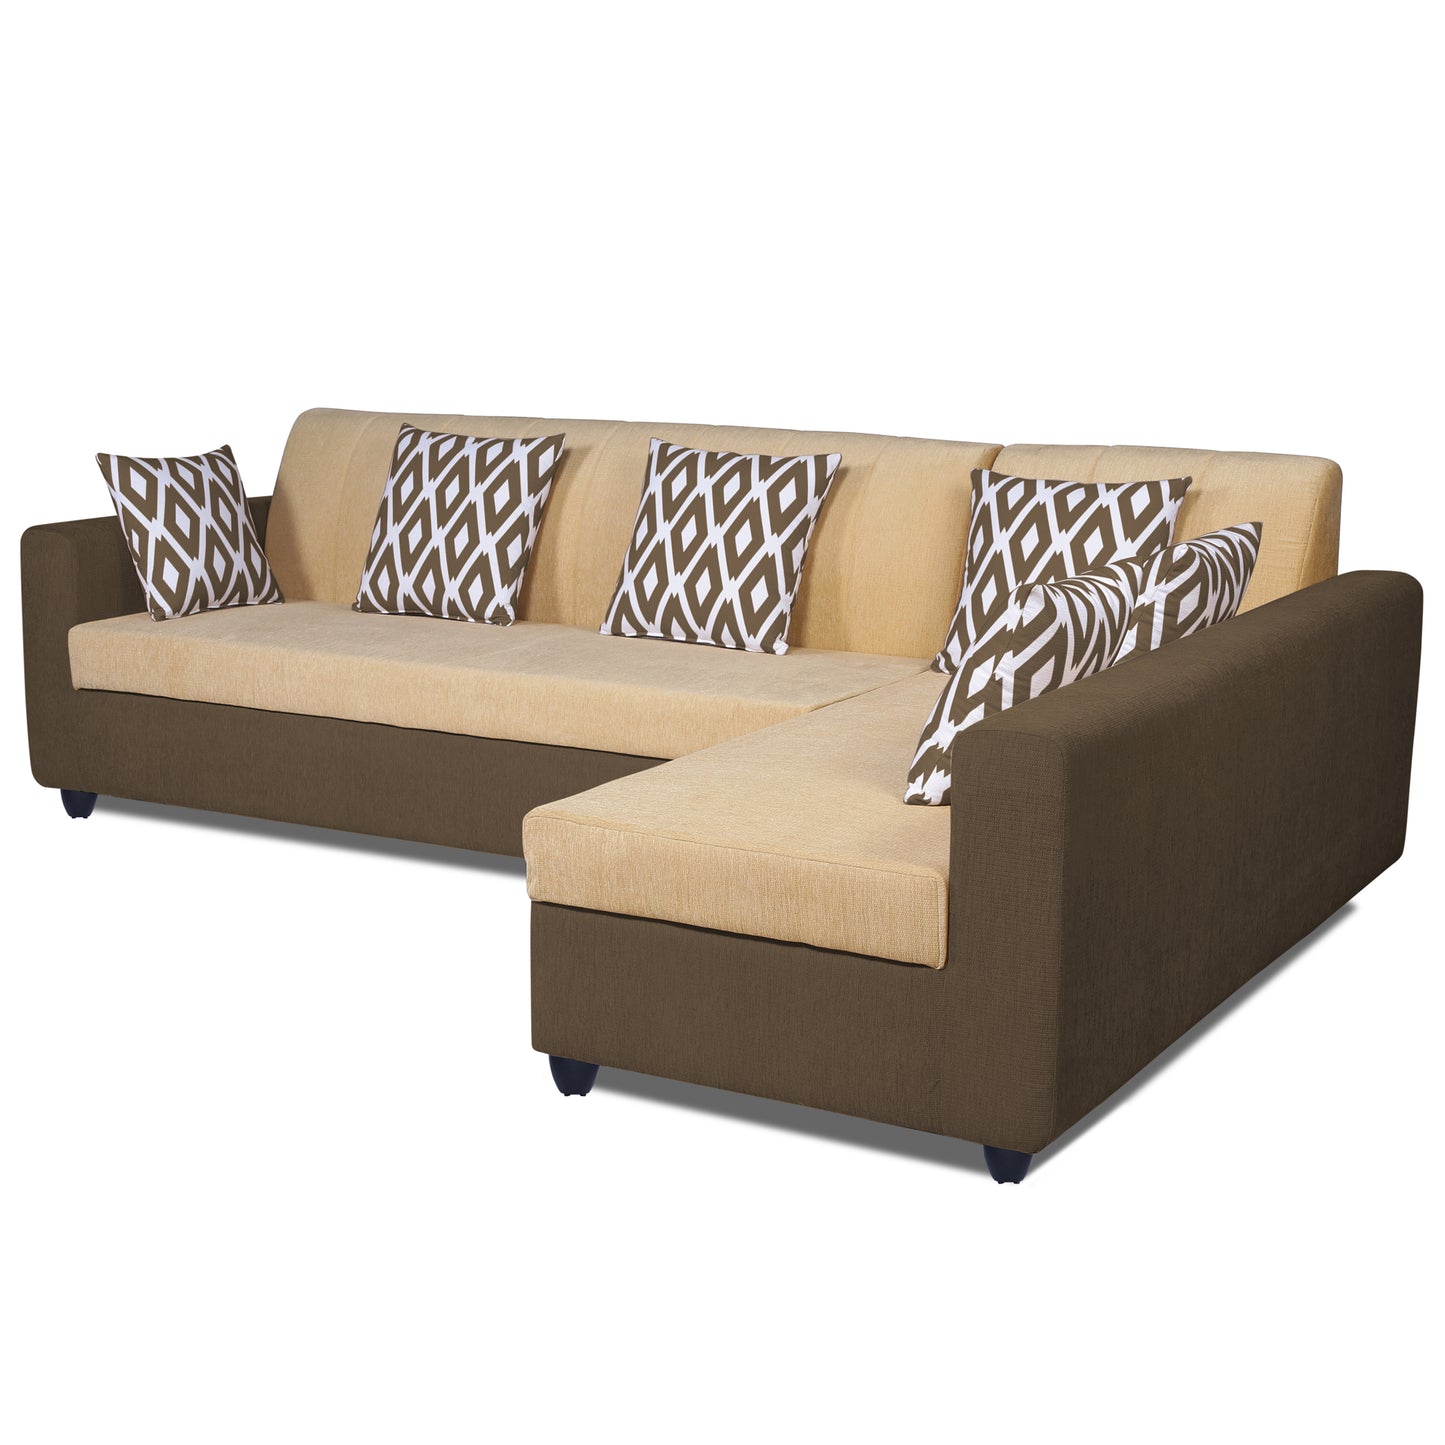 Adorn India Rio Highback L Shape 6 Seater corner Sofa Set (Brown & Beige)